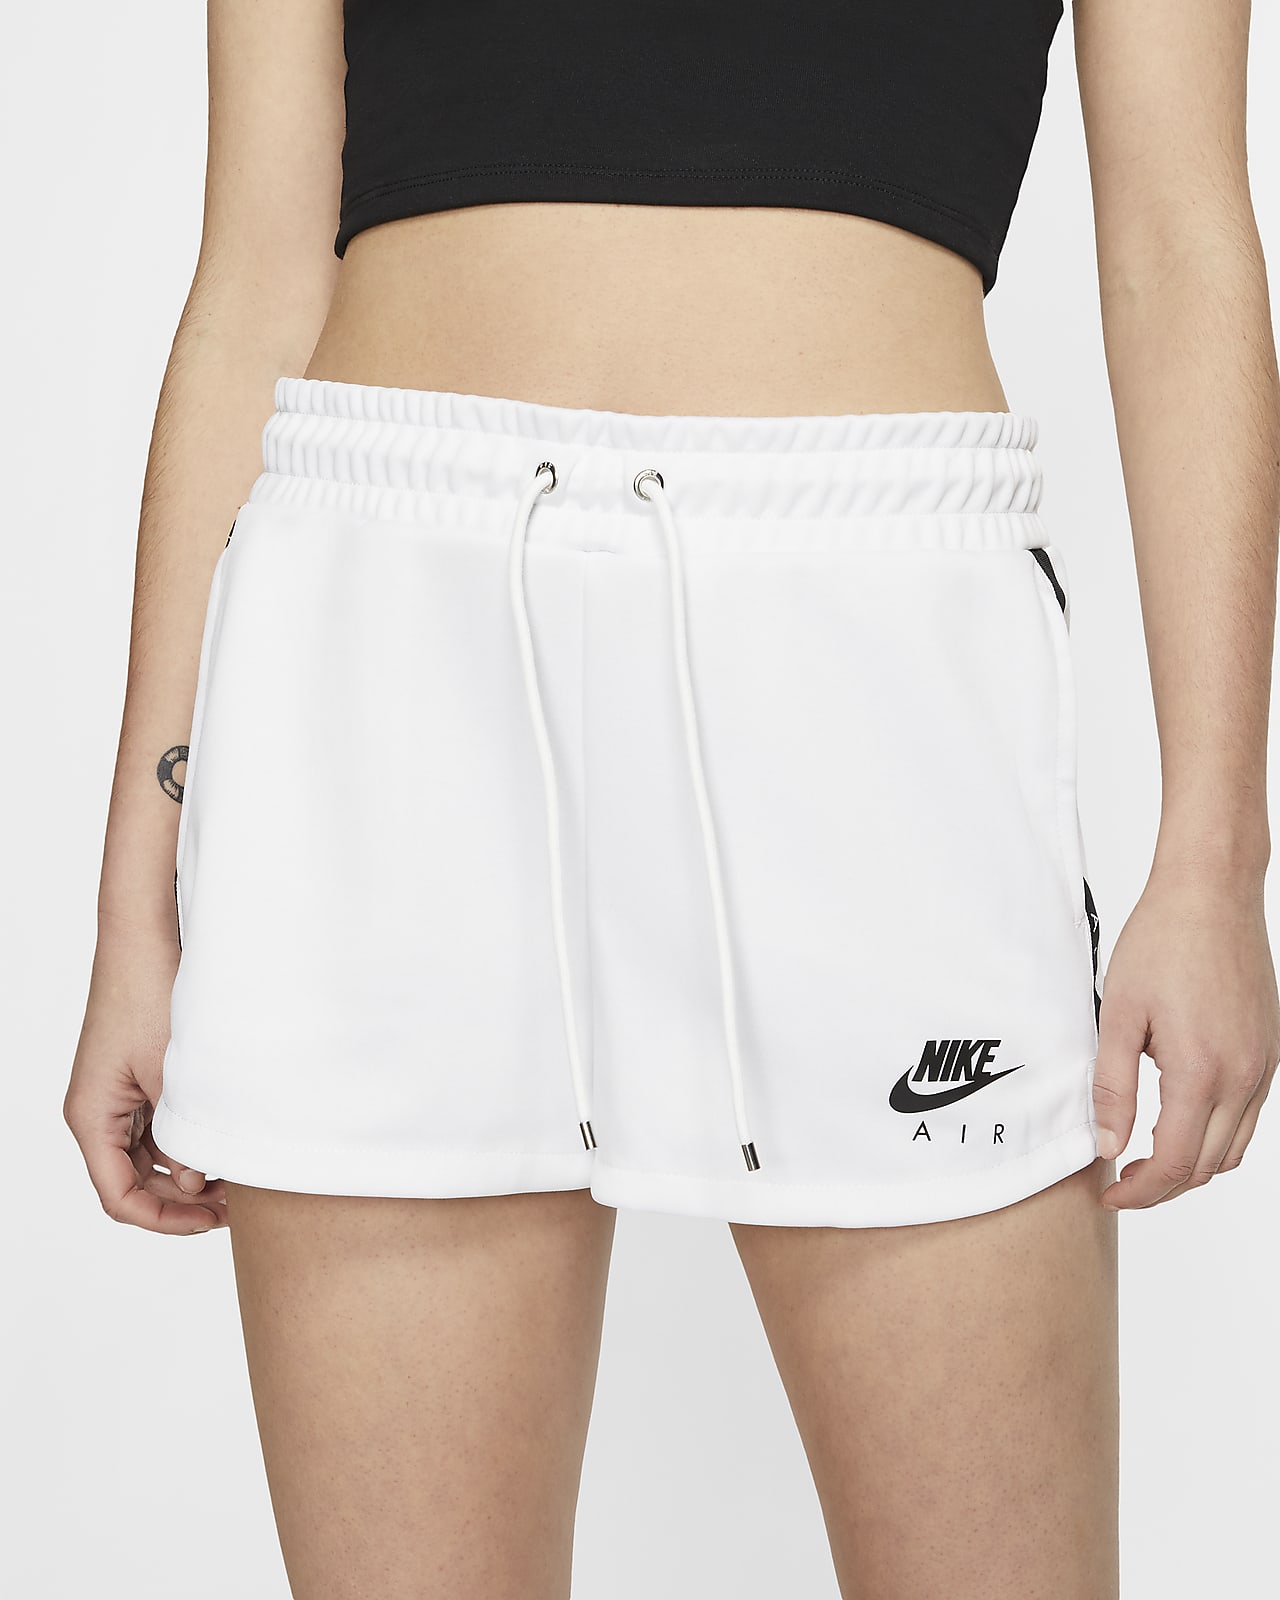 Nike Air Women's Shorts. Nike AT